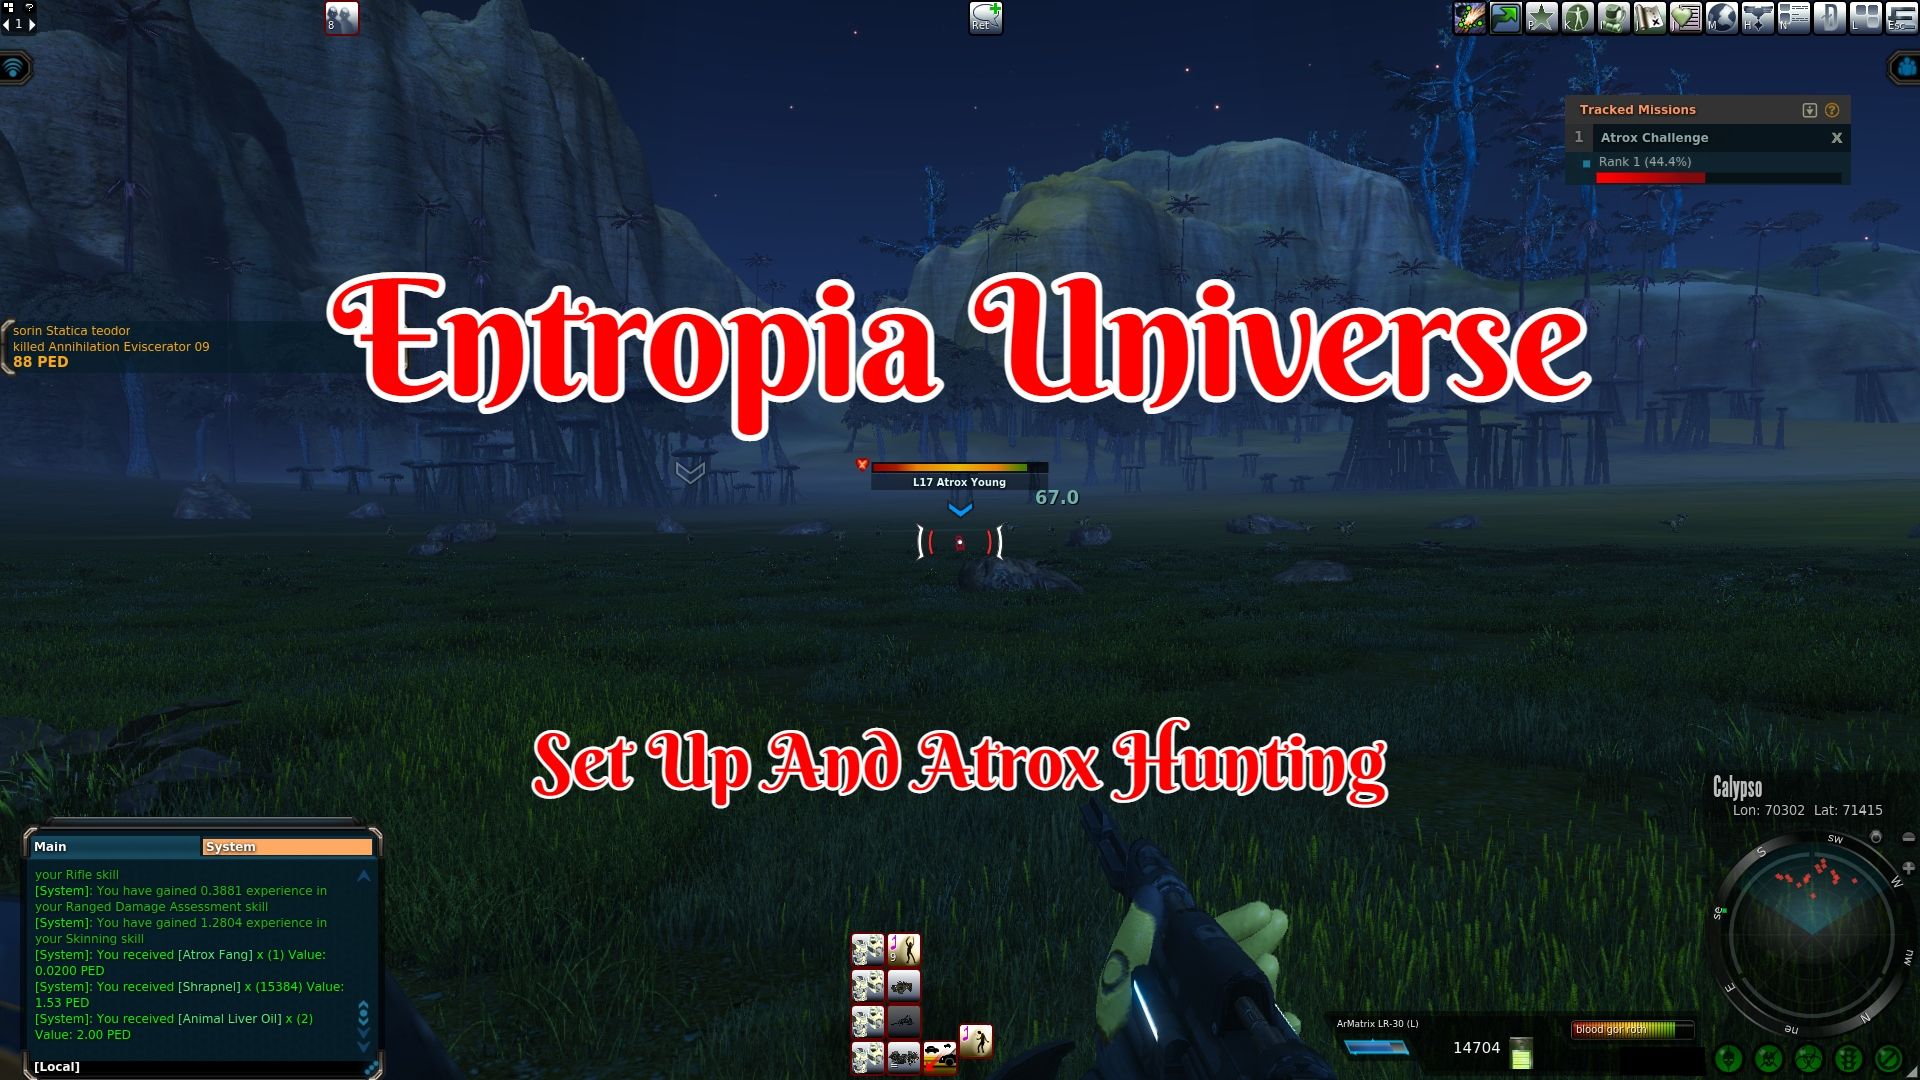 Entropia Universe Setup And Atrox Hunting.jpg